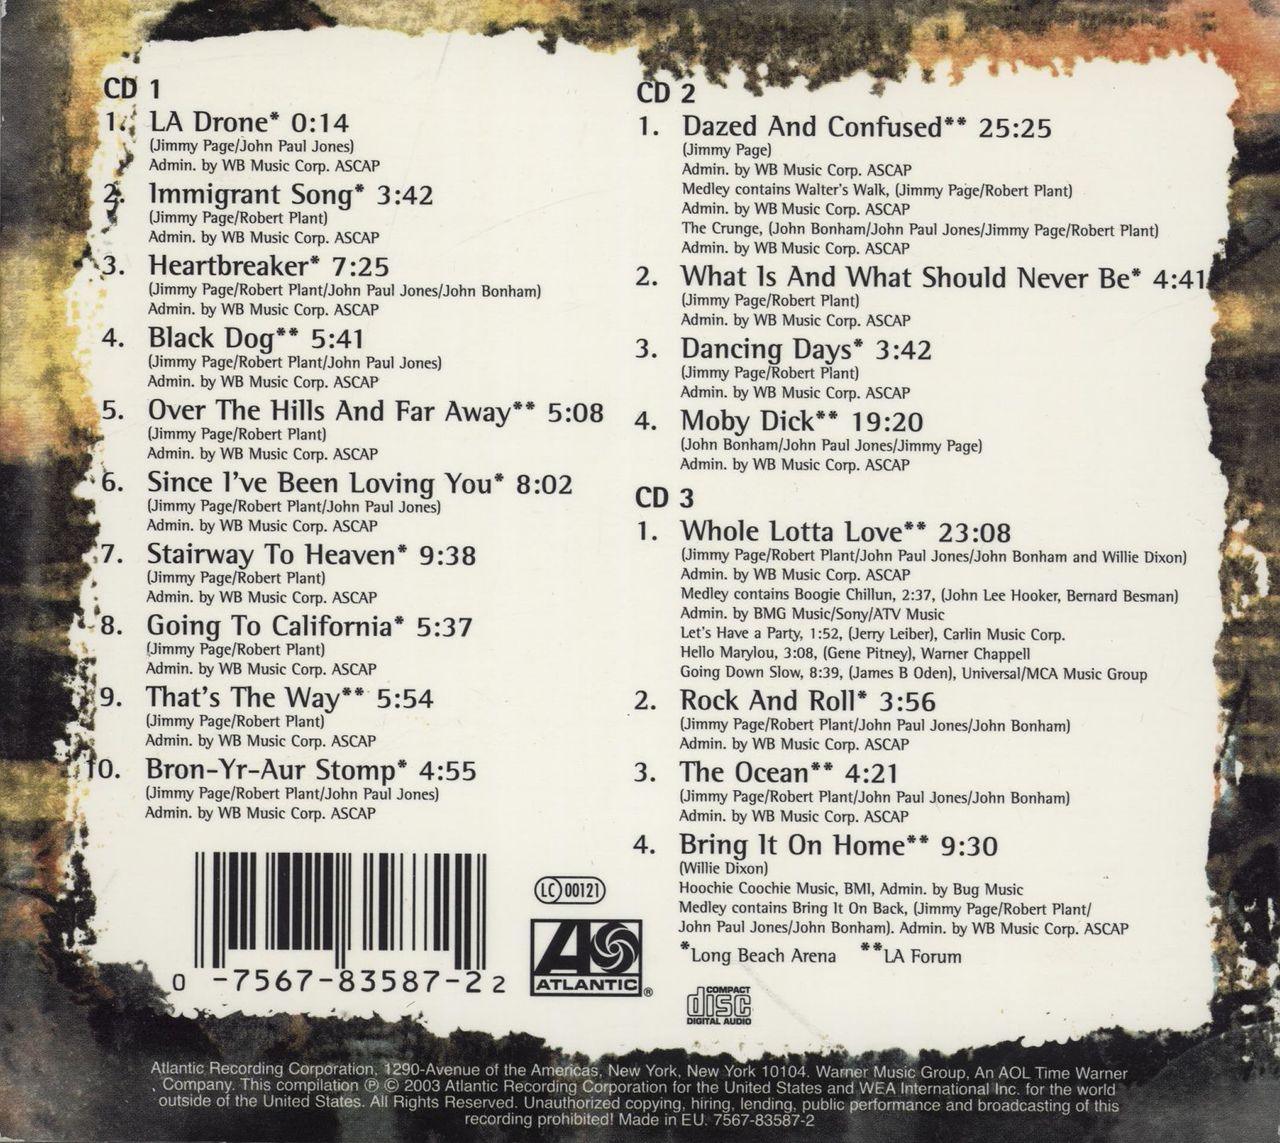 Led Zeppelin How The West Was Won UK 3-CD set — RareVinyl.com